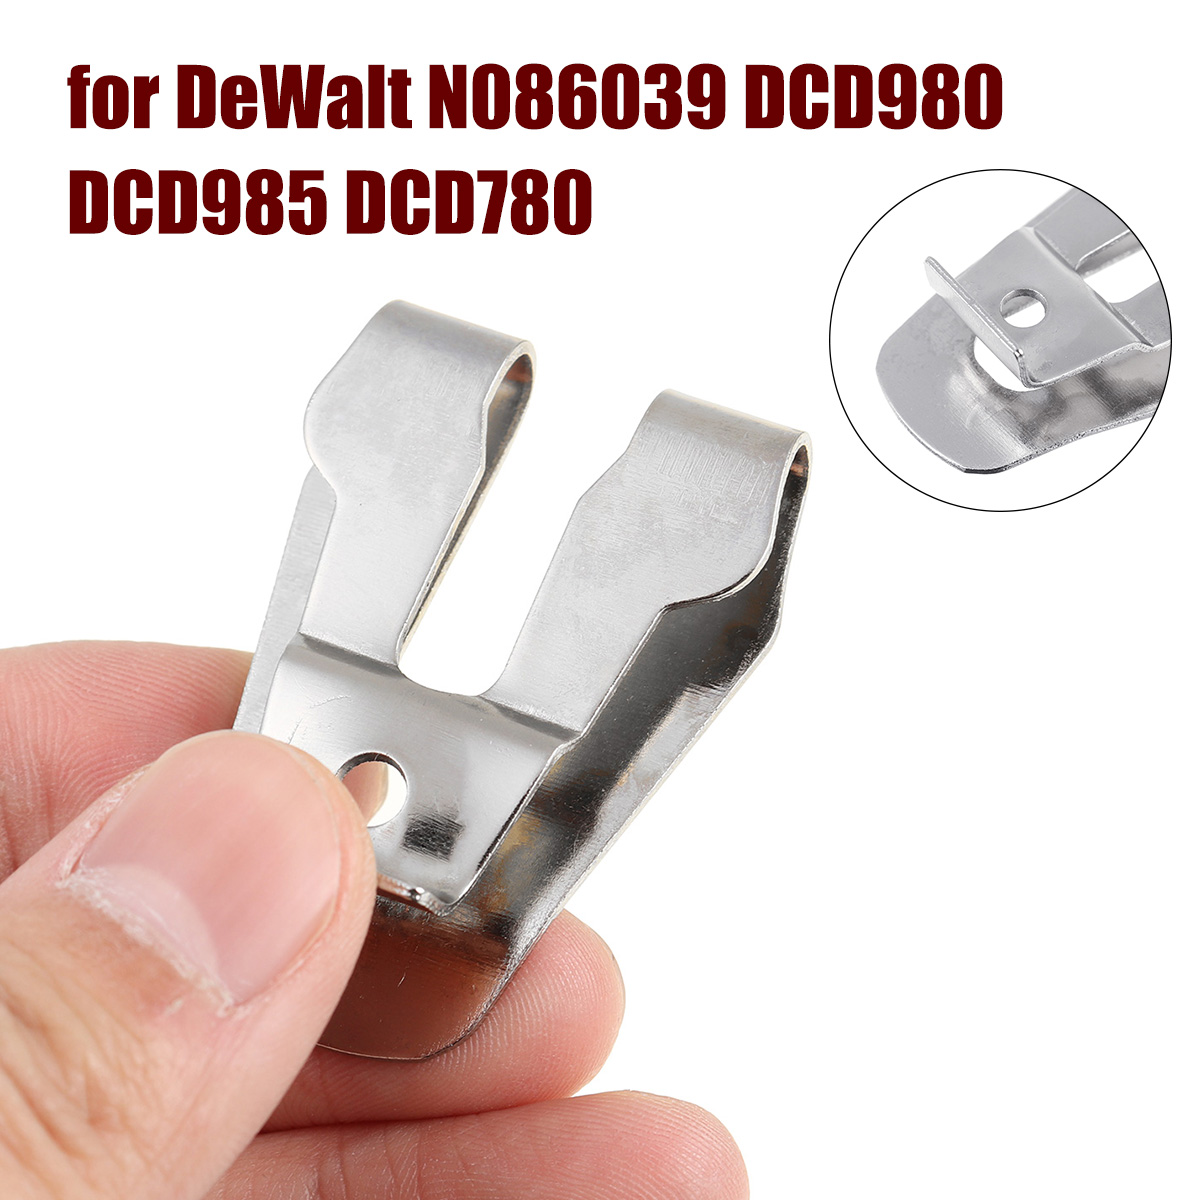 Electric-Cordless-Drill-Belt-HookClip-for-DeWalt-N268241-N169778-N086039-DCD980-1725333-2